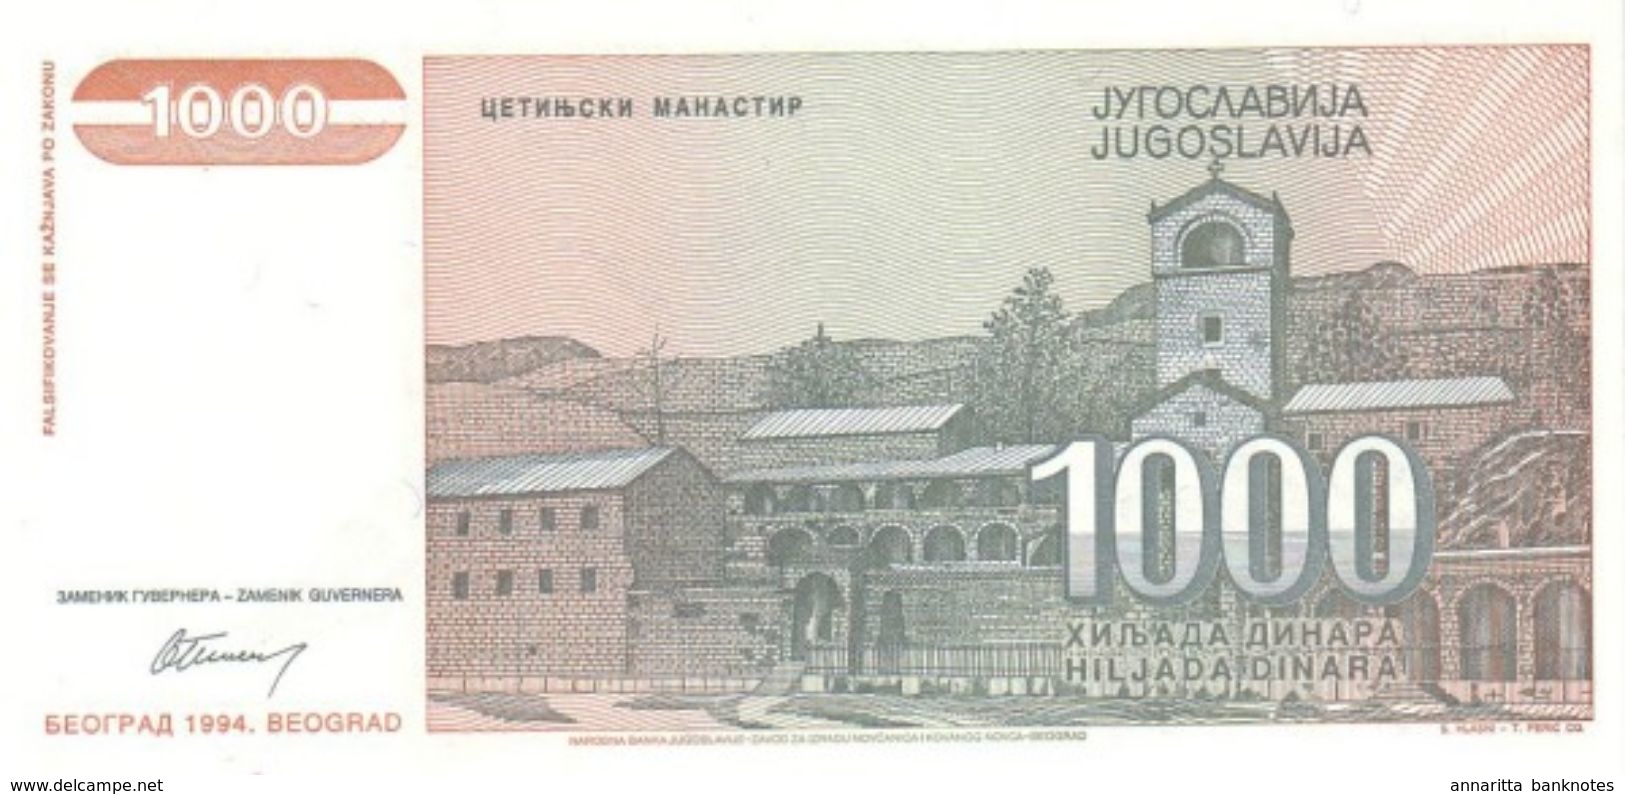 YUGOSLAVIA 1000 DINARA 1994 P-140a UNC  [YU140a] - Jugoslawien